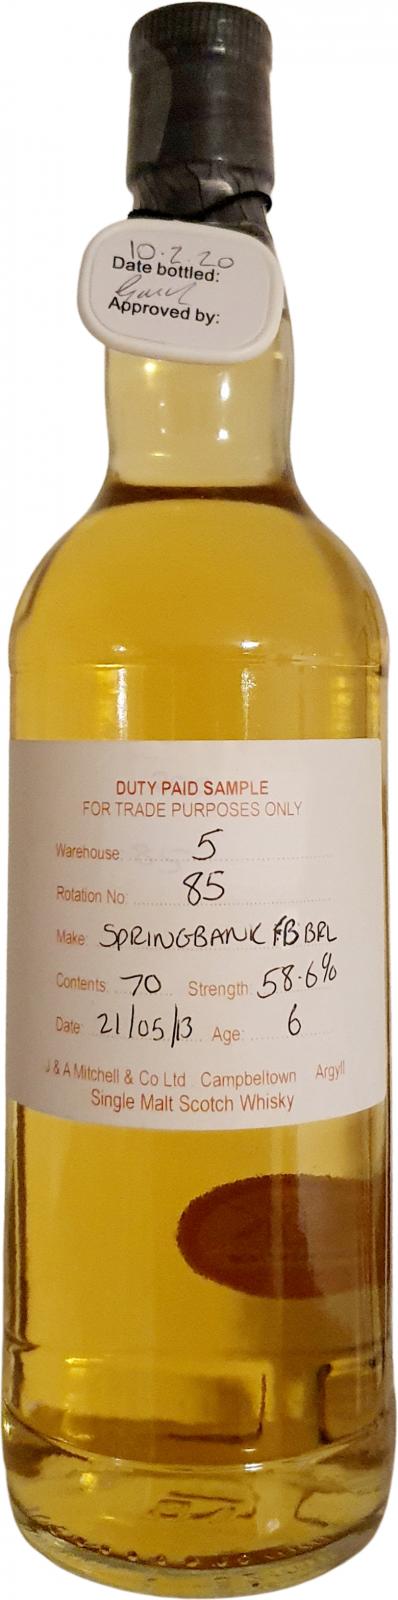 Springbank 2013 Duty paid sample for trade purpose only Fresh Bourbon Barrel Rotation 85 58.6% 700ml